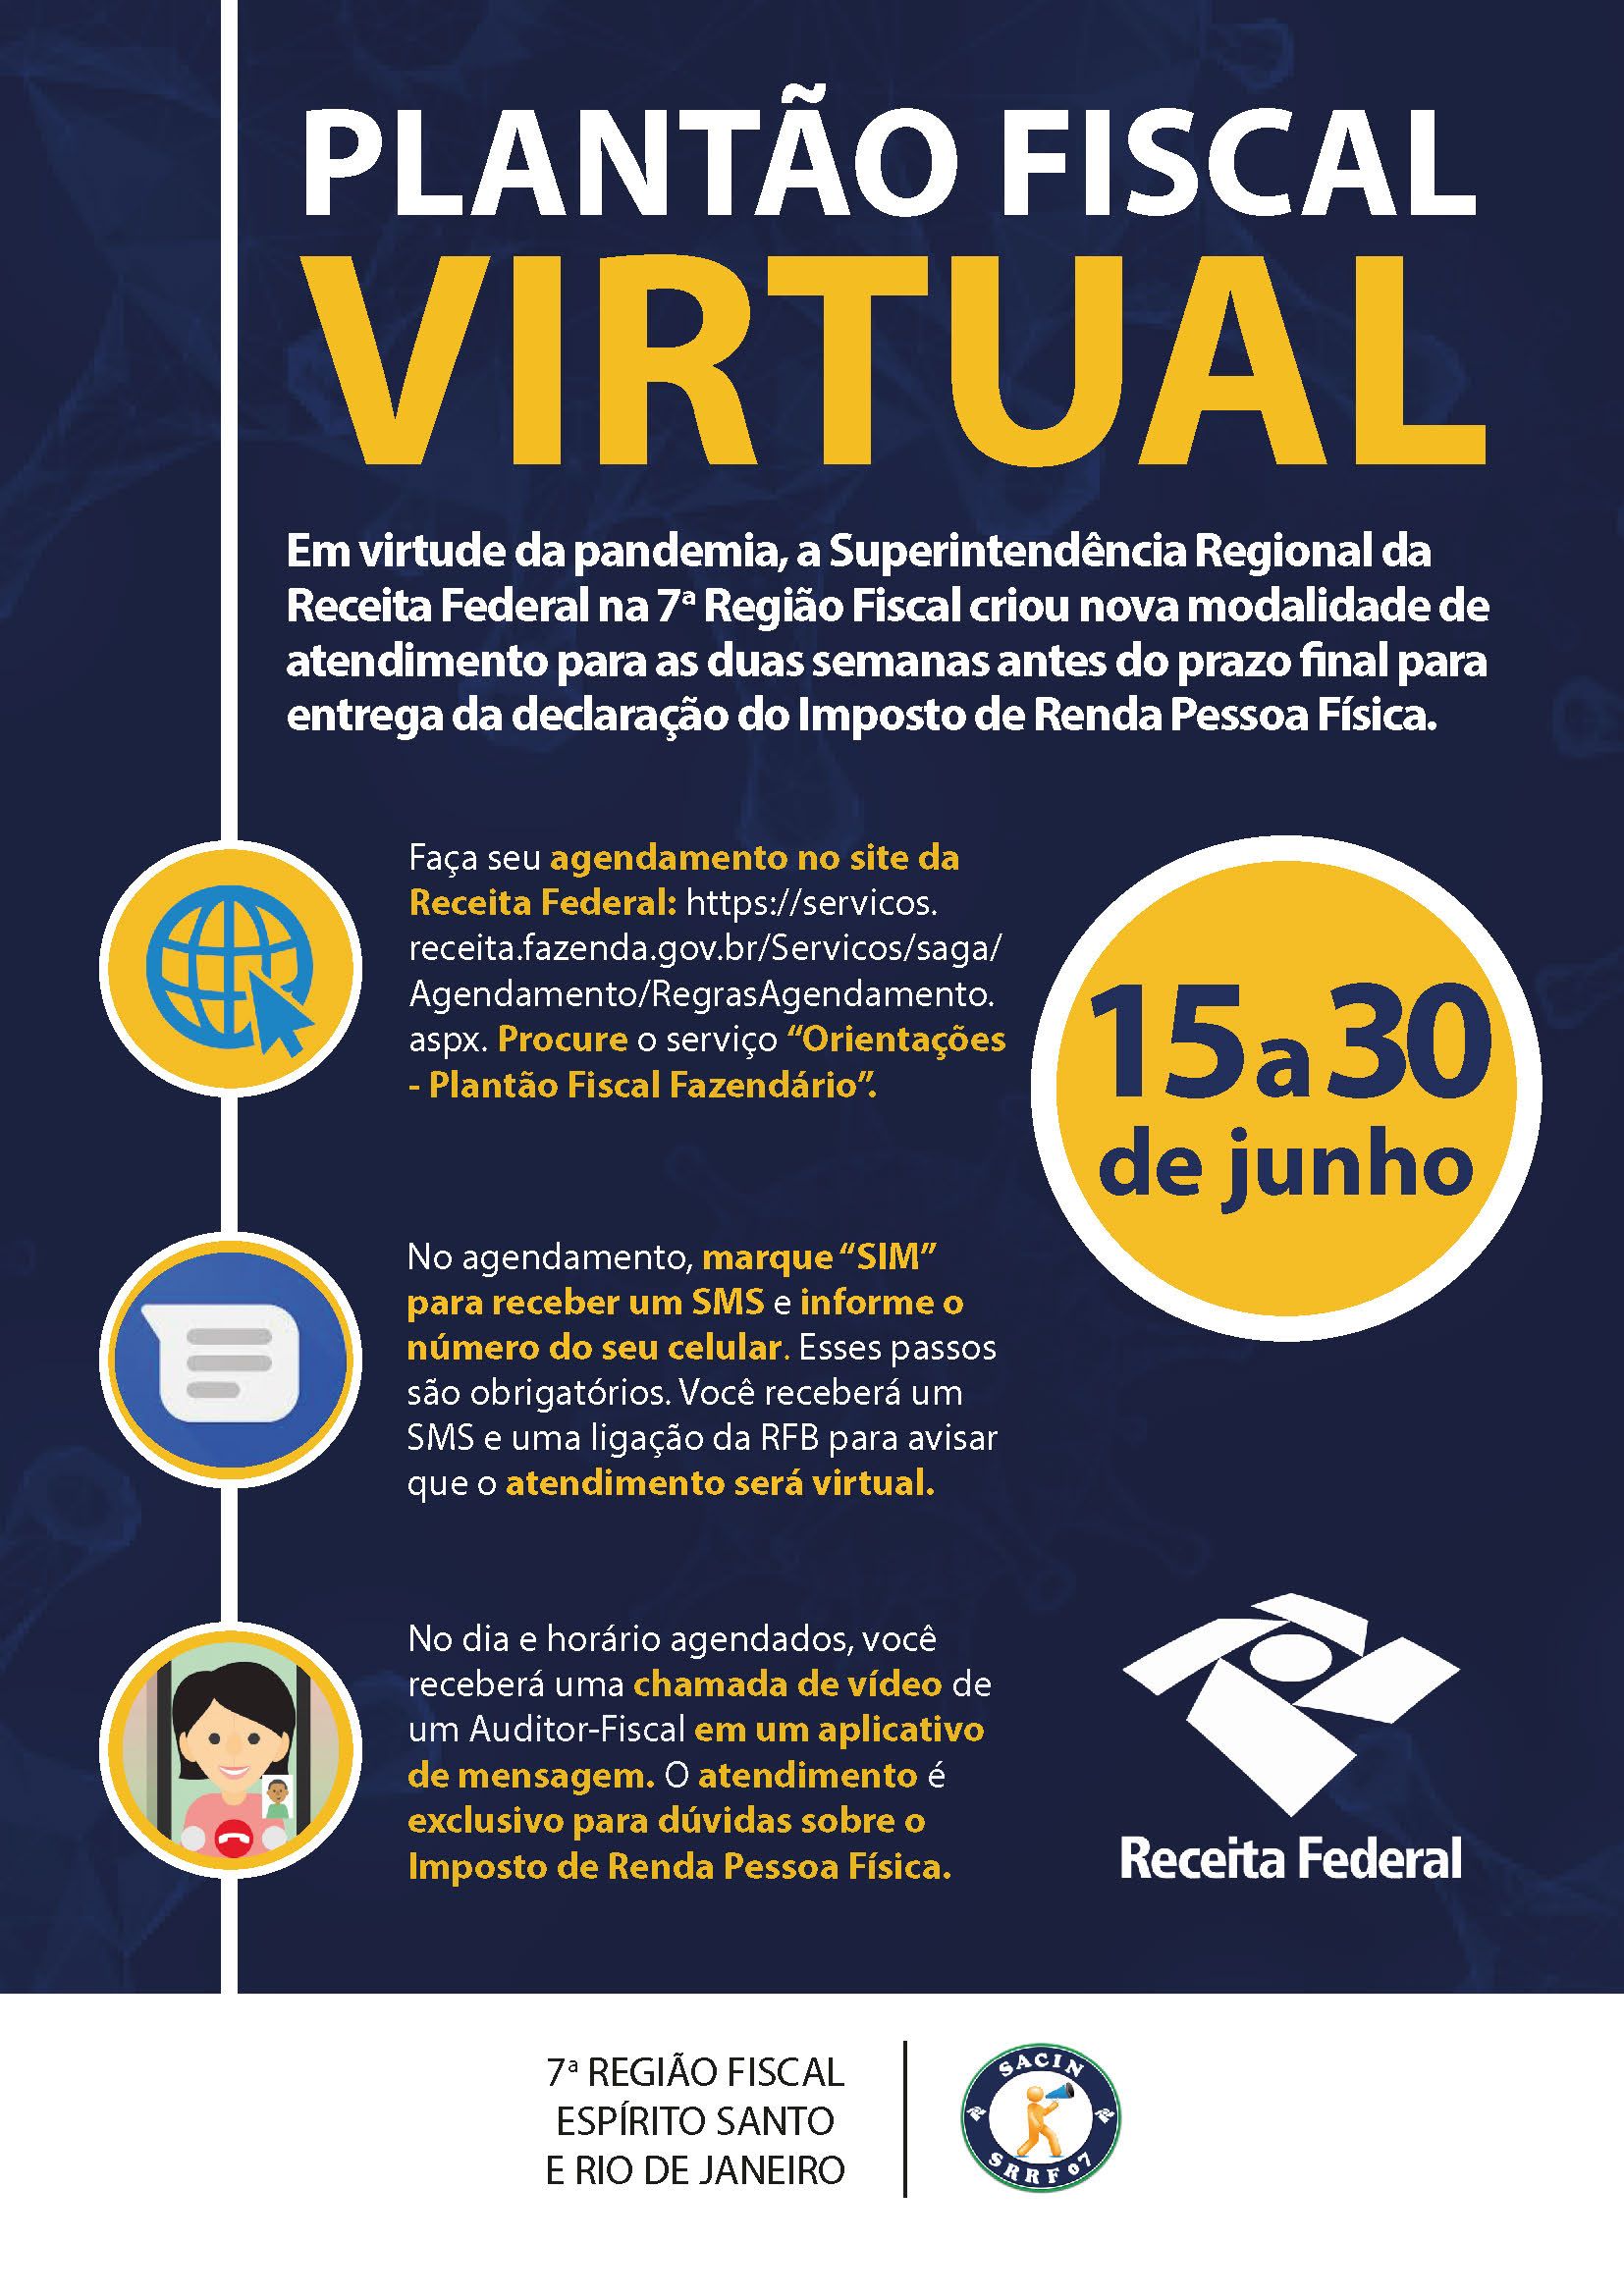 Plantão Fiscal Virtual.jpg